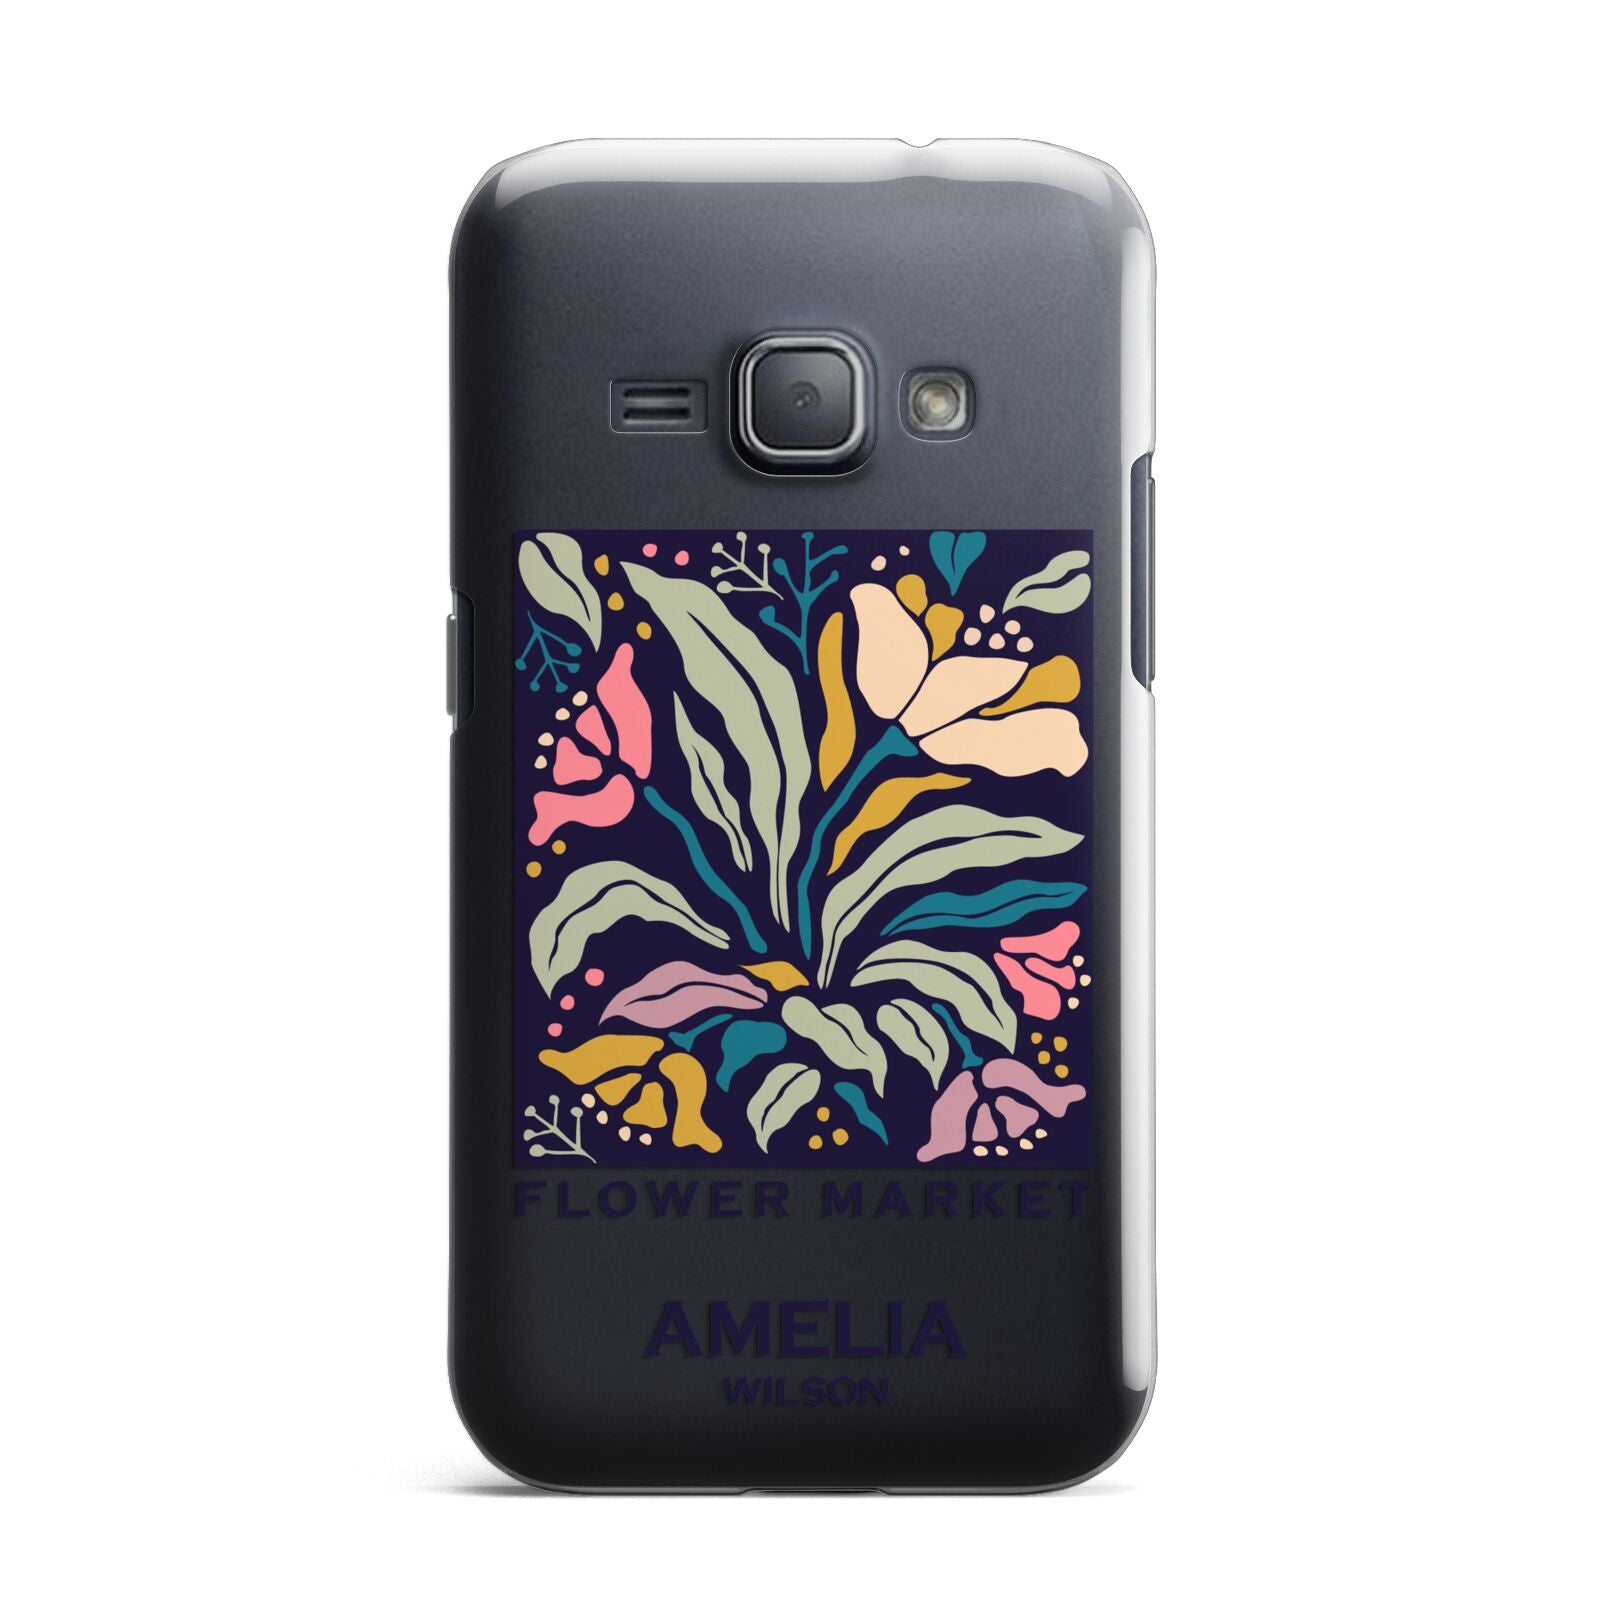 Seoul Flower Market Samsung Galaxy J1 2016 Case